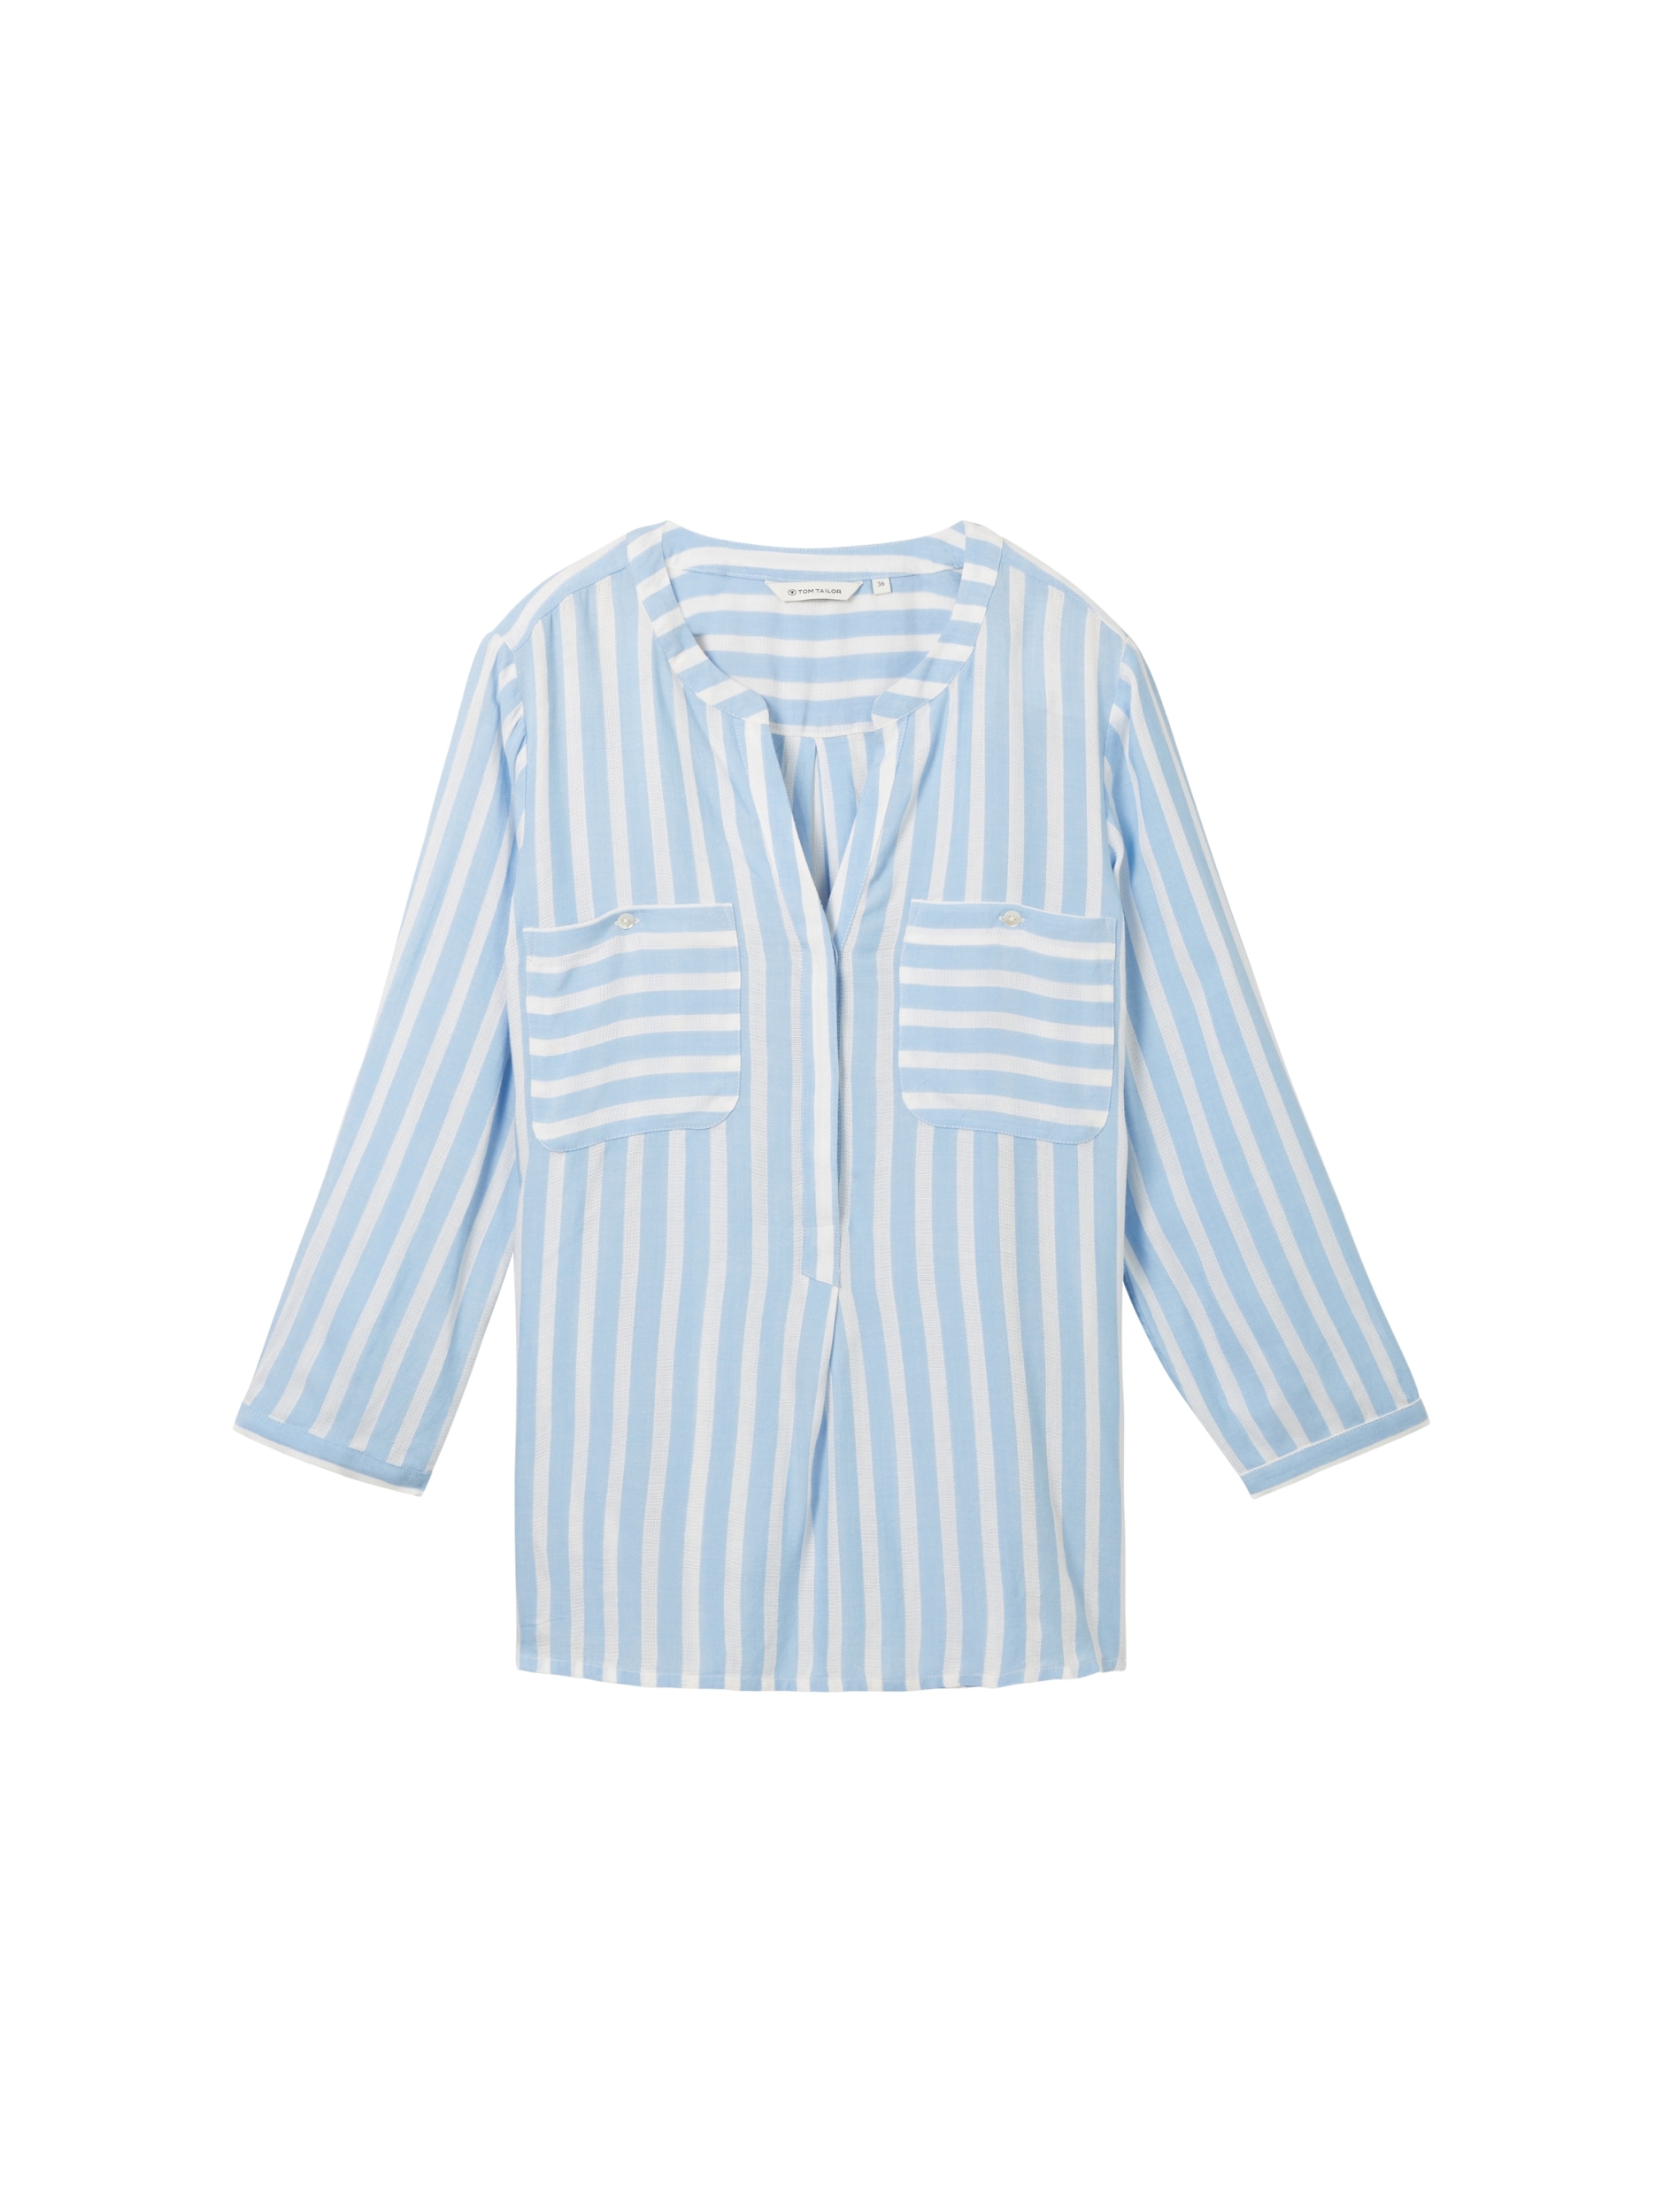 TOM TAILOR blouse striped online kaufen